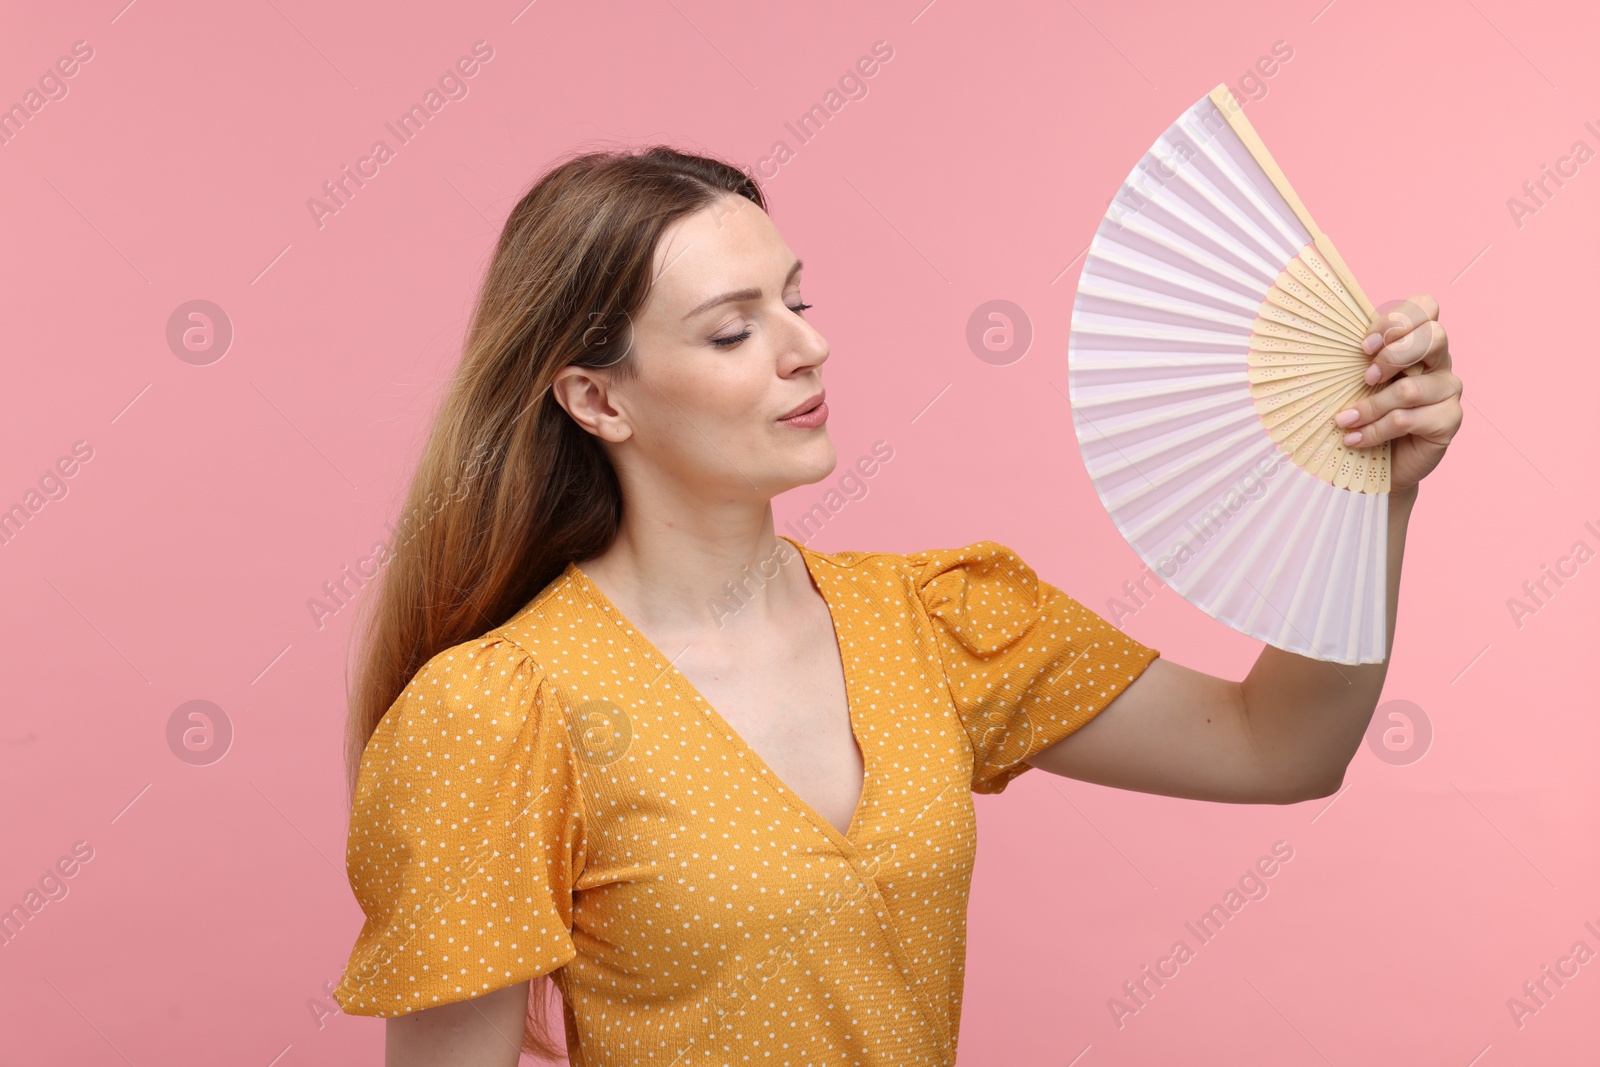 Photo of Beautiful woman waving yellow hand fan to cool herself on pink background